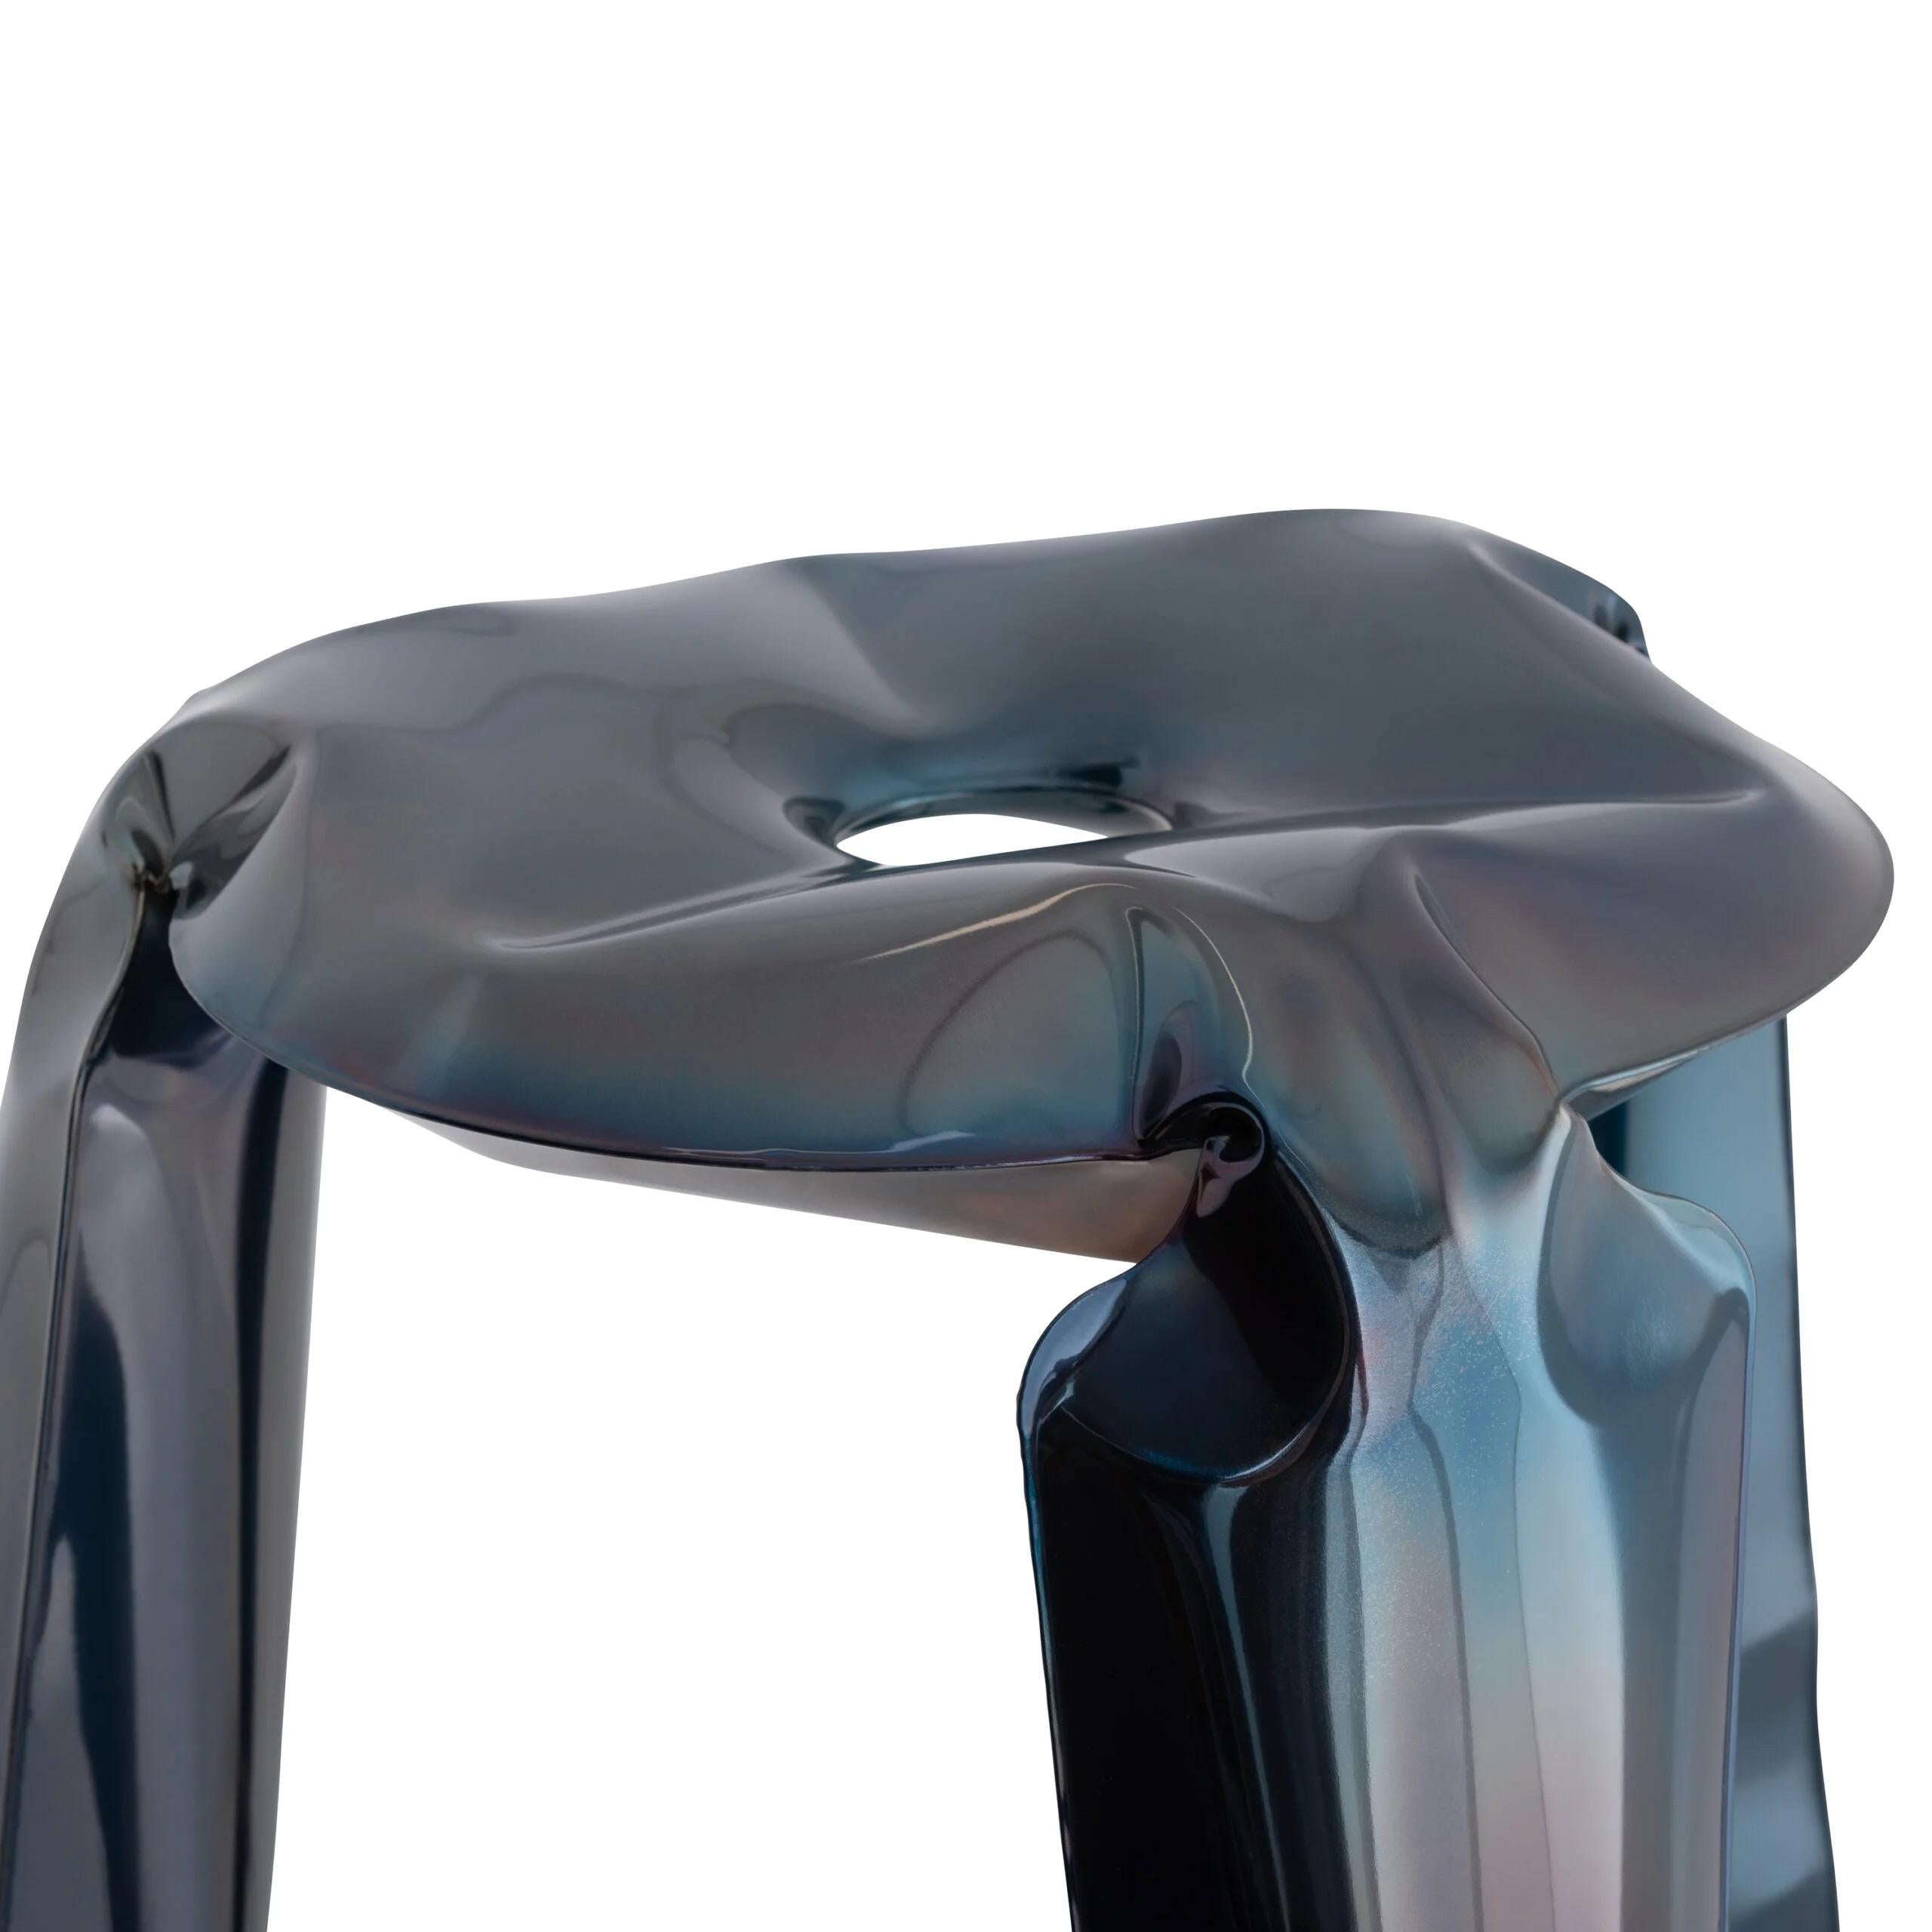 Cosmic Blue Mini Plopp Stool by Zieta In New Condition For Sale In Geneve, CH